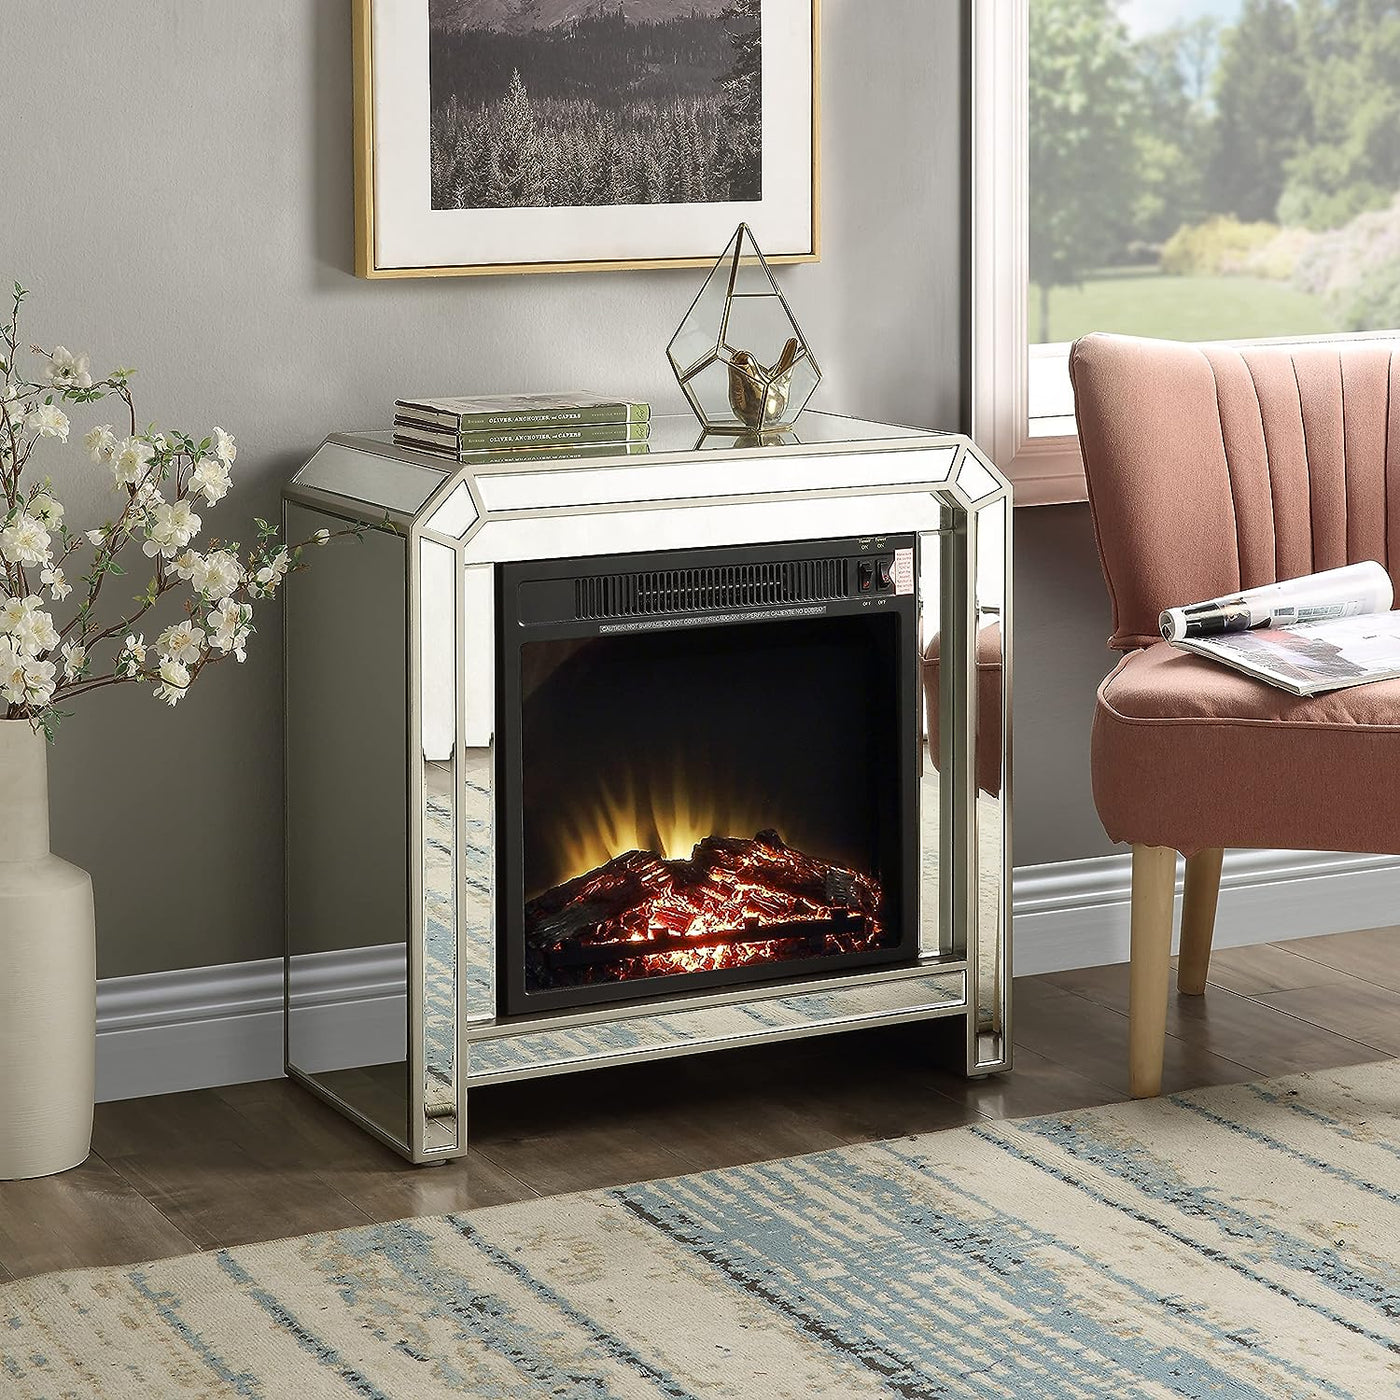 MIREO Mirrored Fireplace with Crystal Diamond Inlay-$150